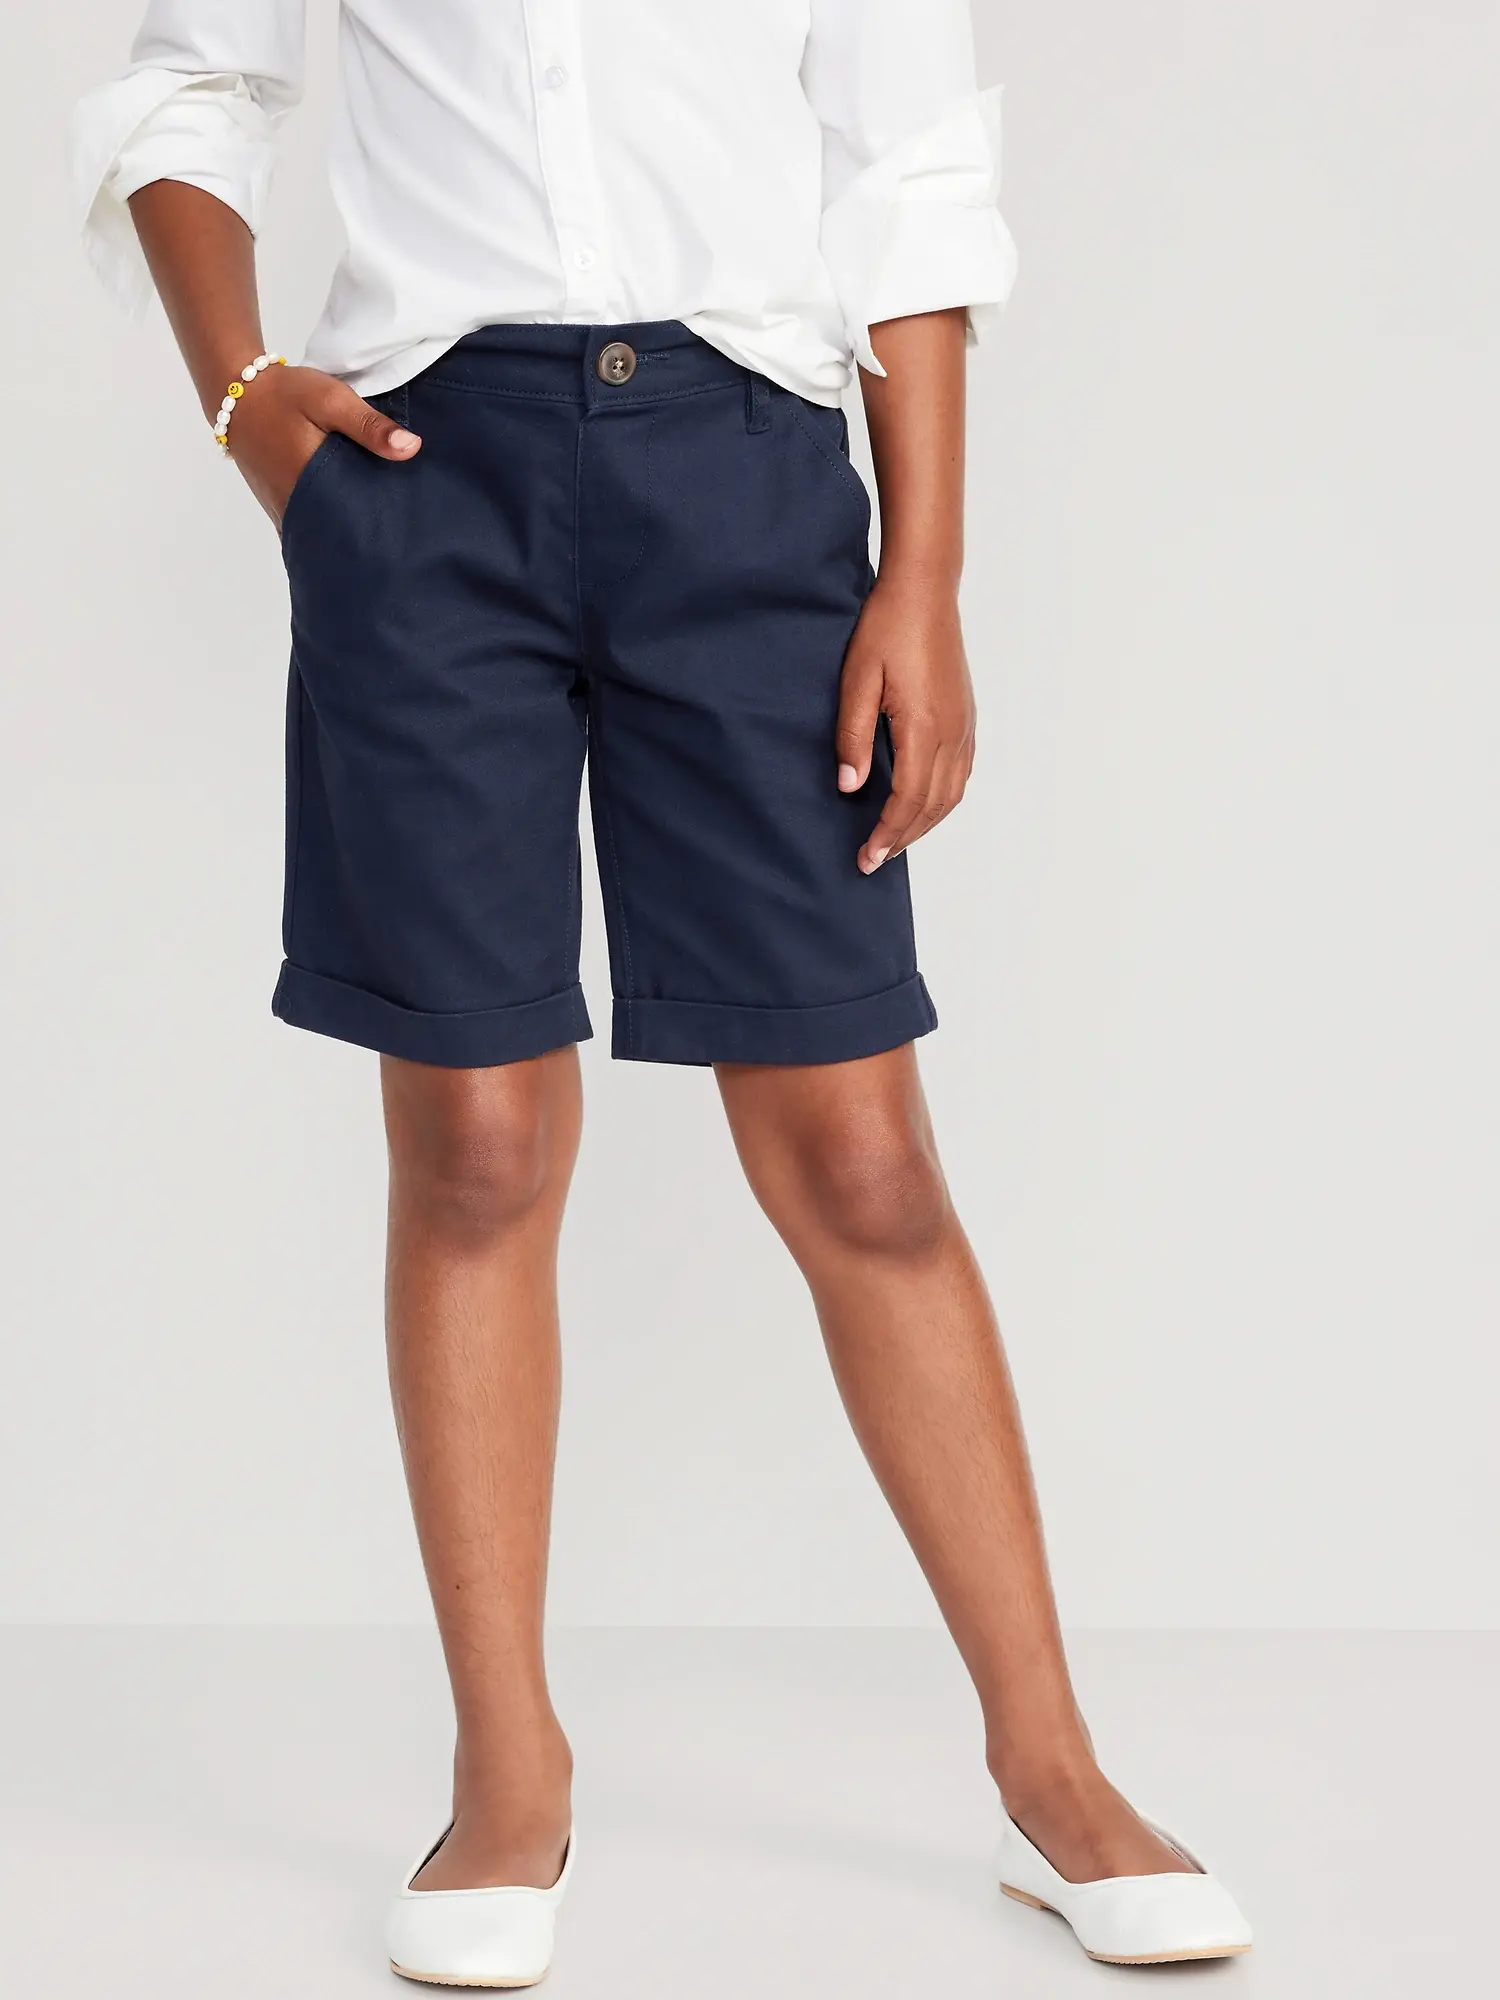 Old Navy School Uniform Pull-On Bermuda Shorts for Girls blue. 1